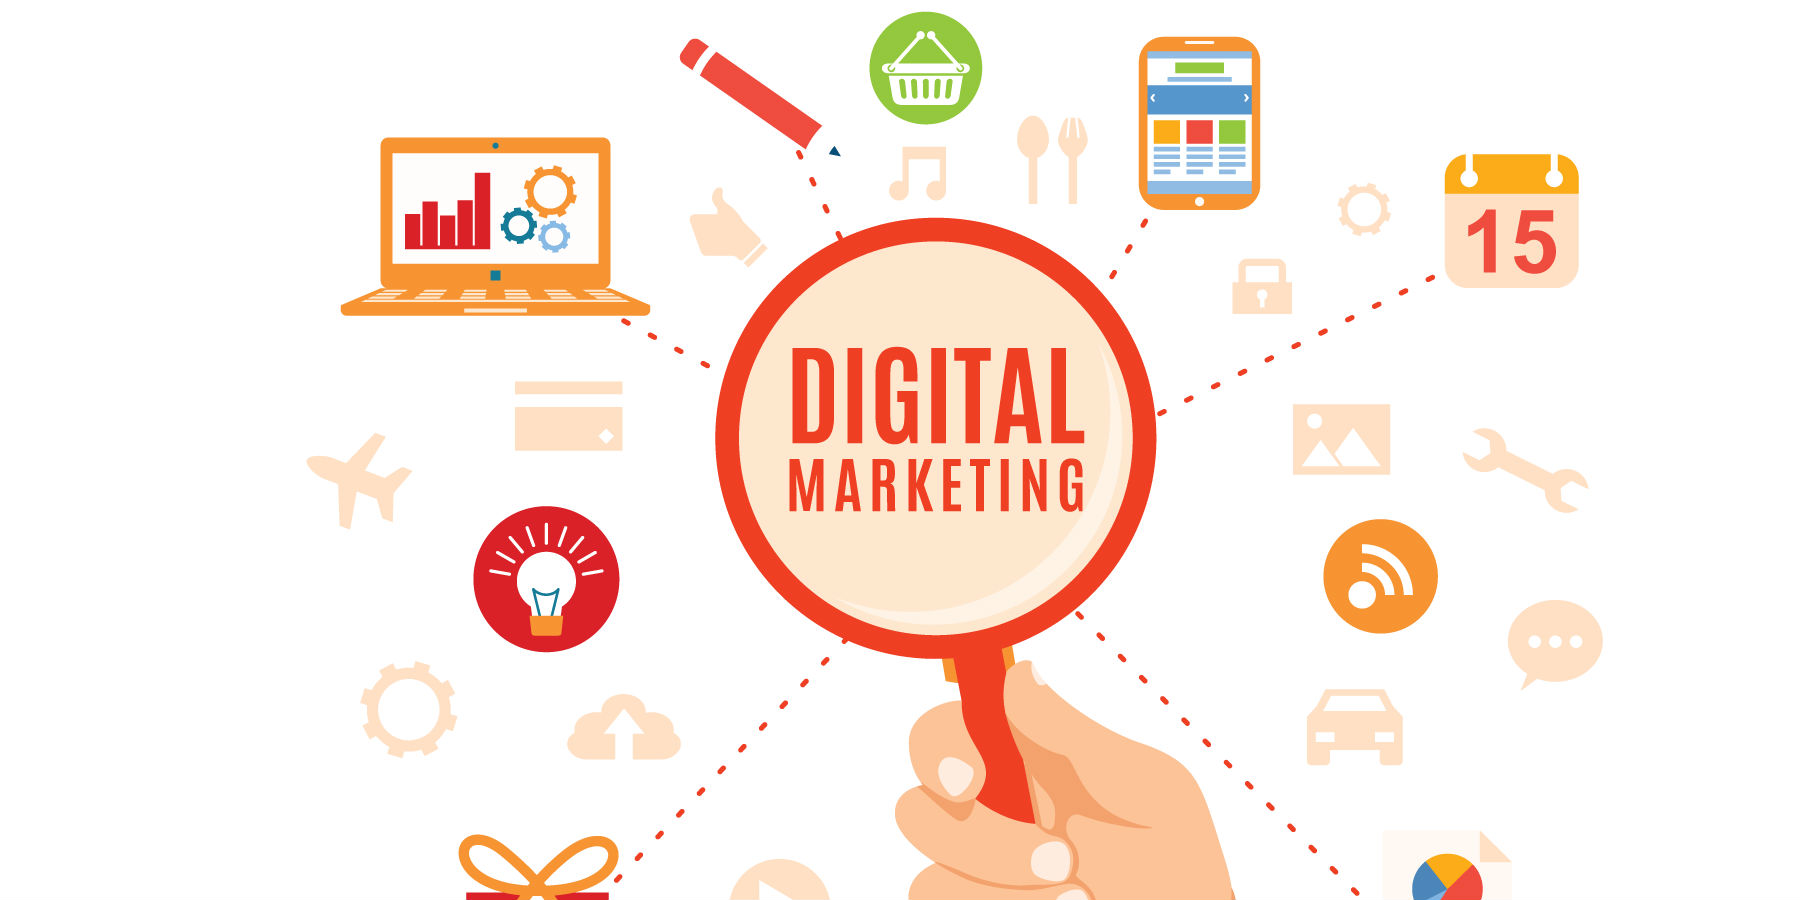 The digital marketing agency BTOB changes its image